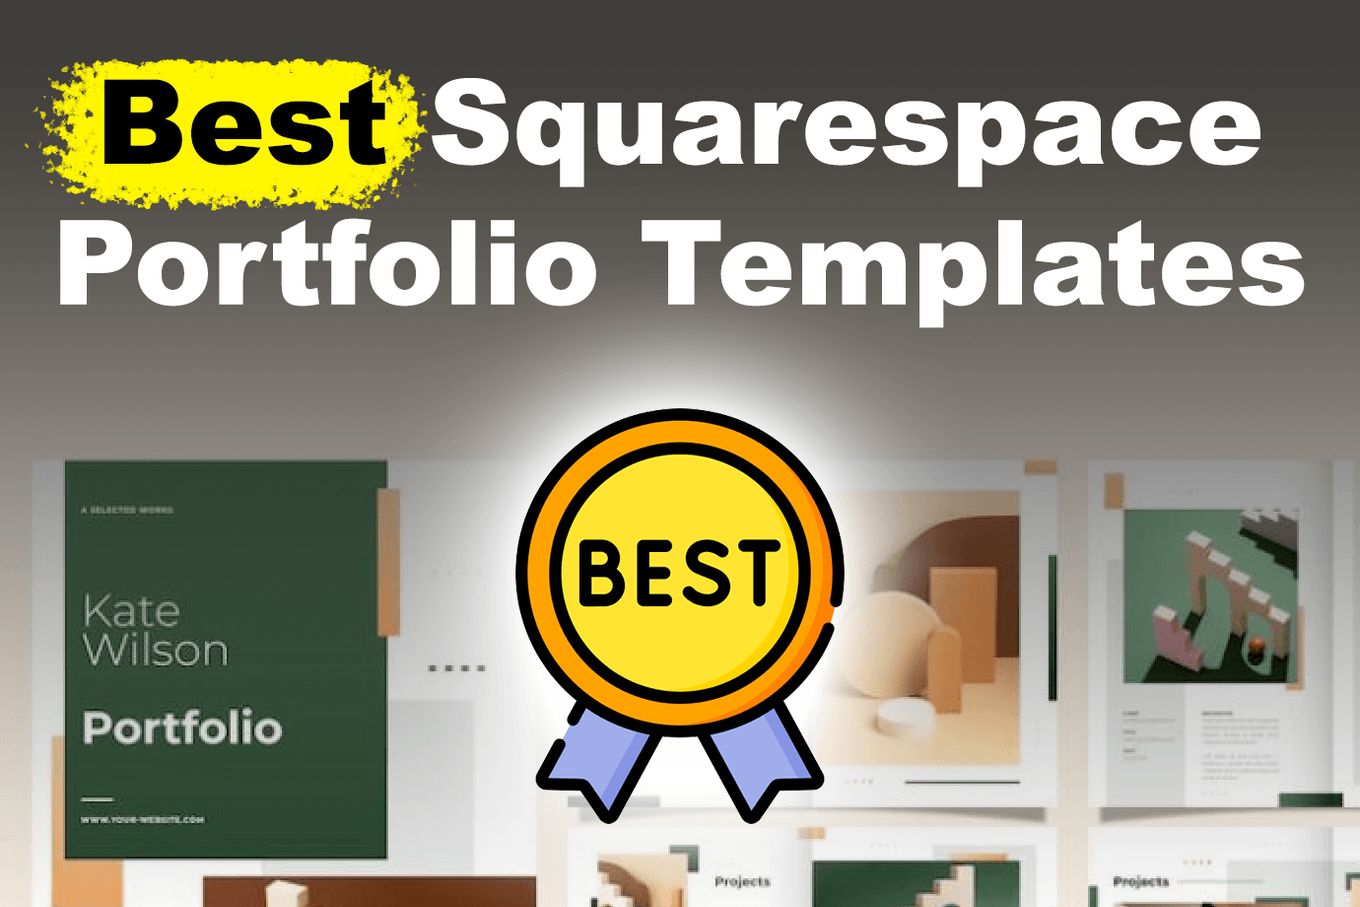 List of Squarespace Portfolio Templates